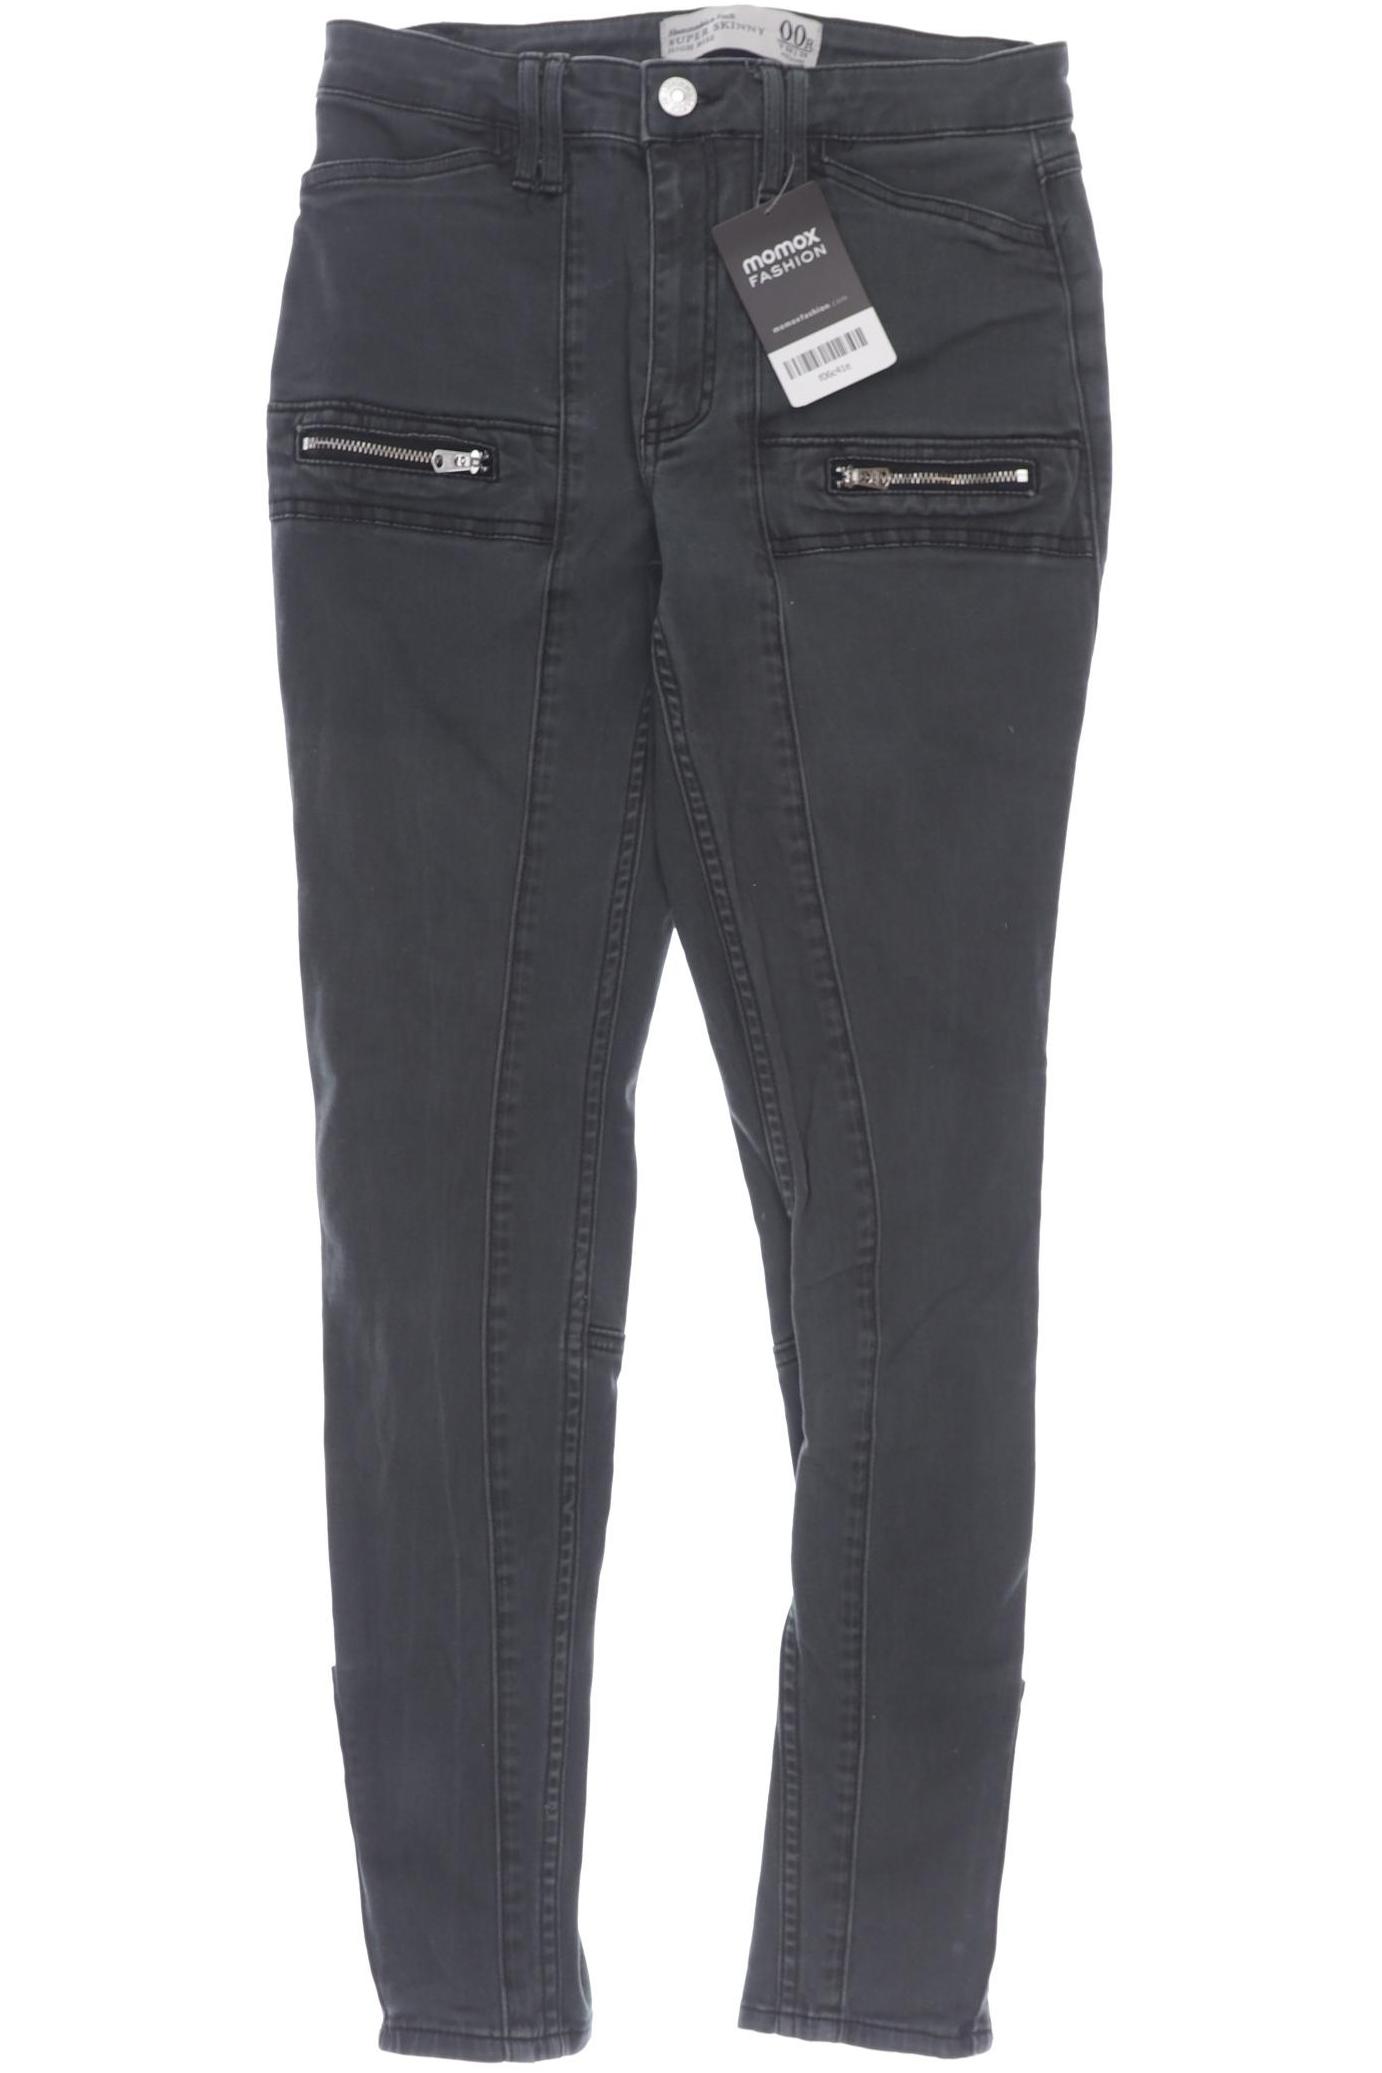 Abercrombie & Fitch Damen Jeans, grün von Abercrombie & Fitch